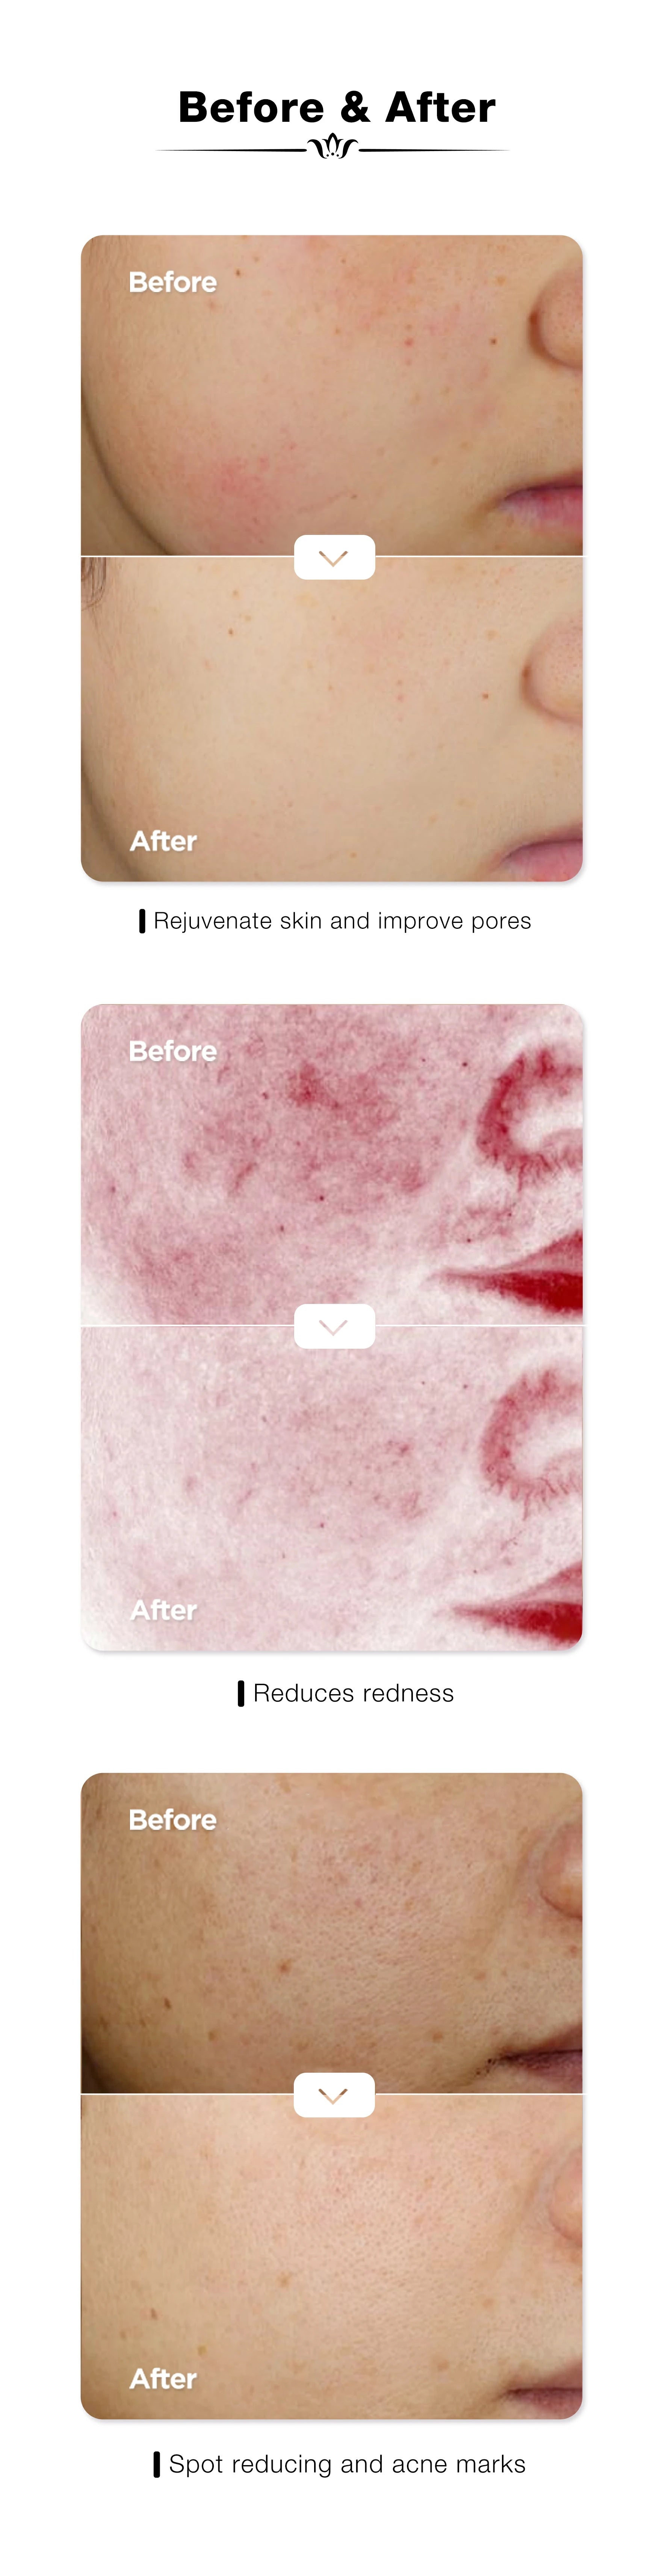 Vertical before and after images illustrating skin rejuvenation, redness reduction, and spot treatment with JOVS Blacken DPL Photorejuvenation Device.